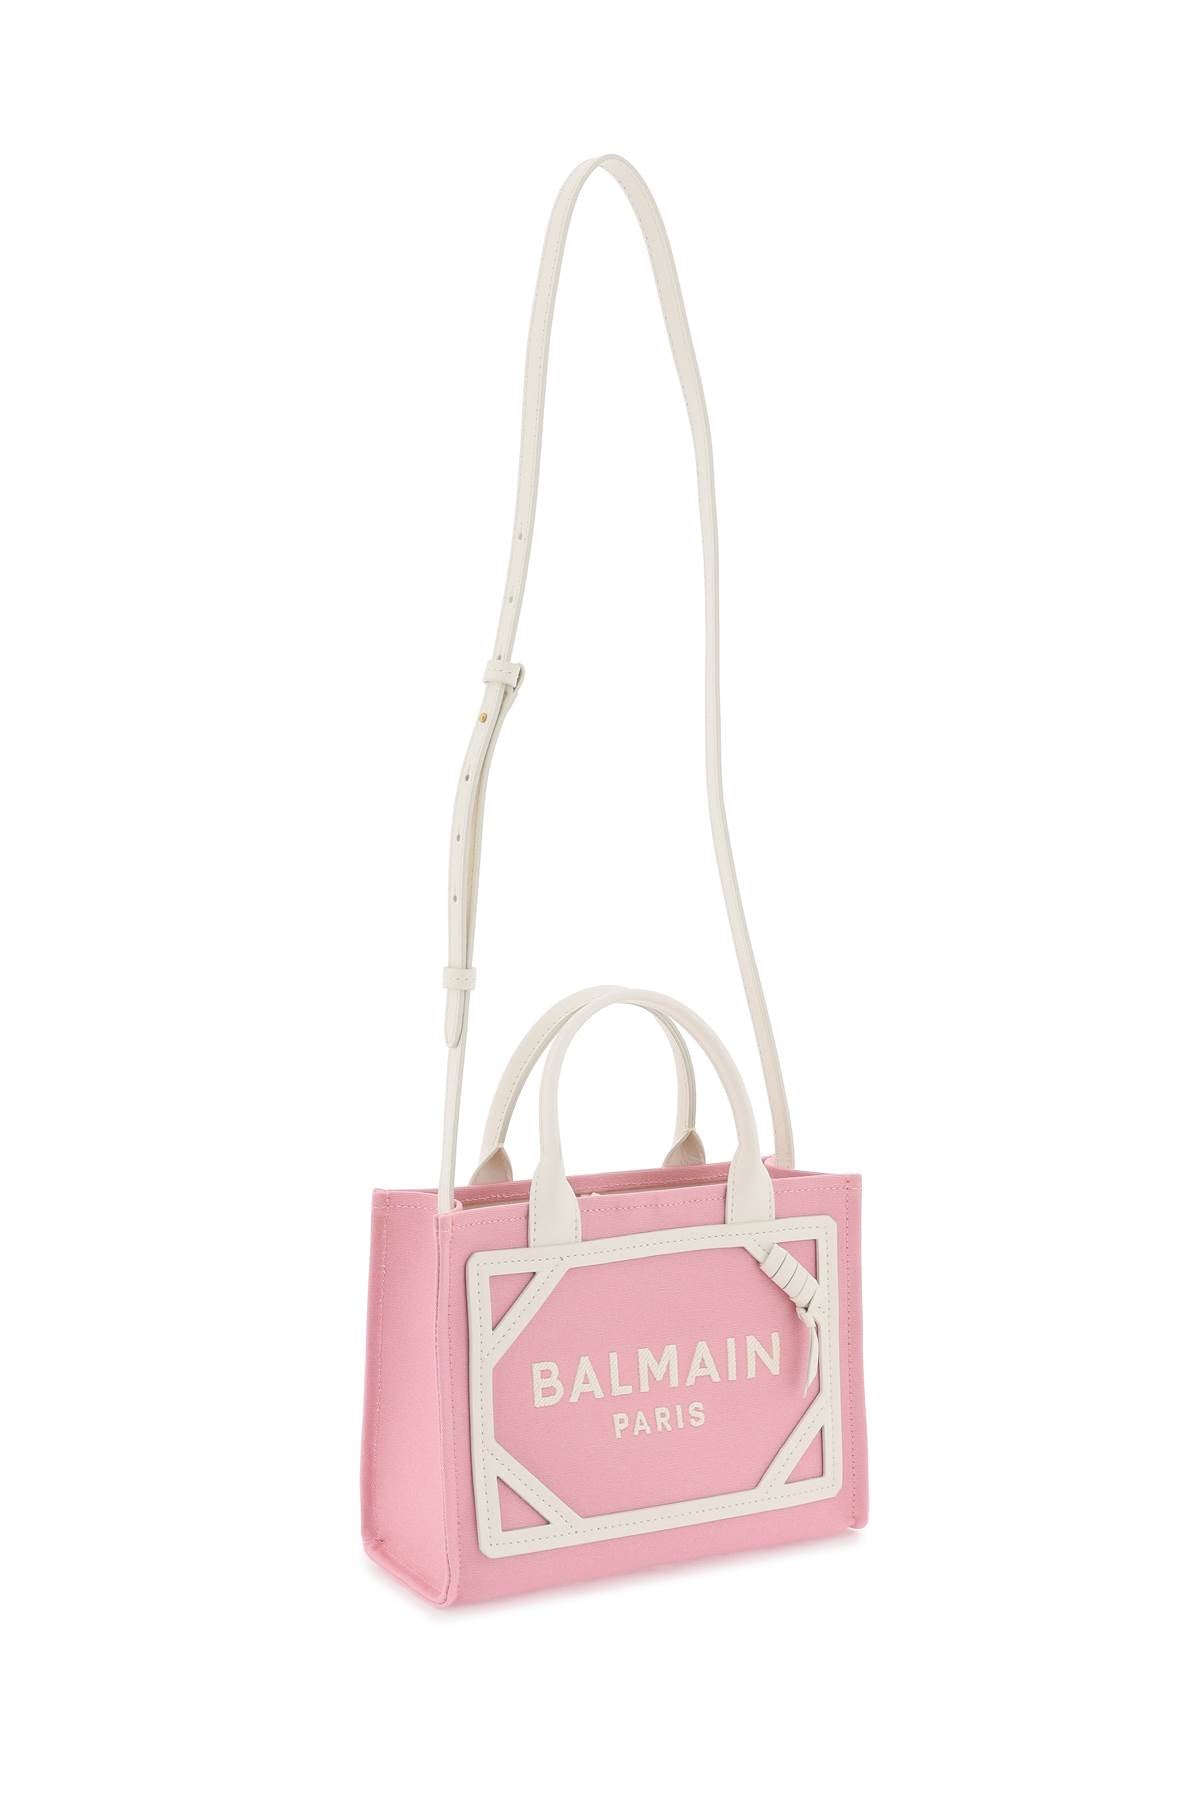 Balmain B-Army Cotton Canvas Tote Bag Pink